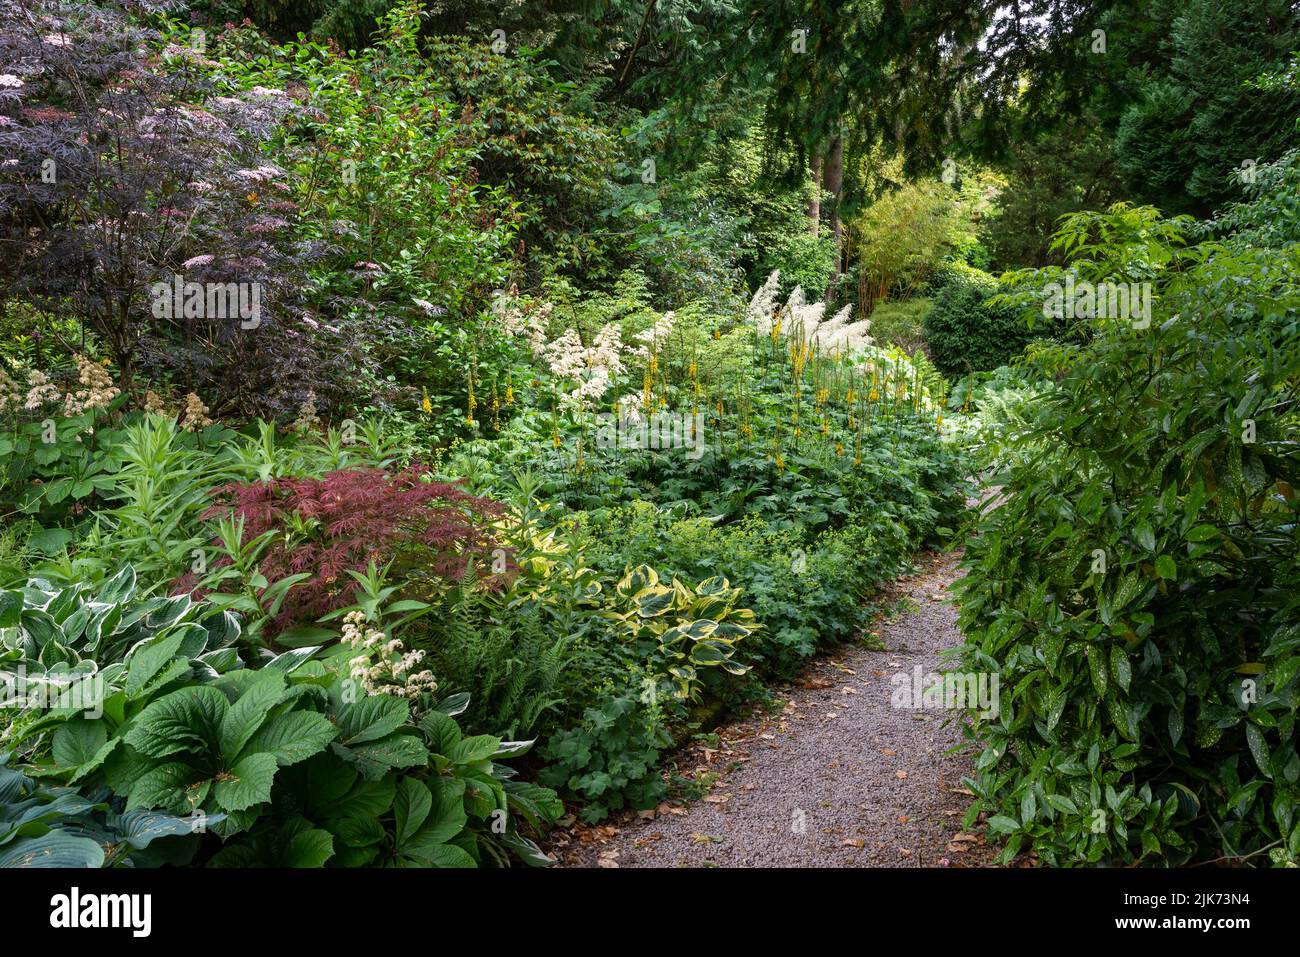 Shade tolerant planting at Thornbridge Hall gardens near Bakewell, Derbyshire, England. Stock Photo